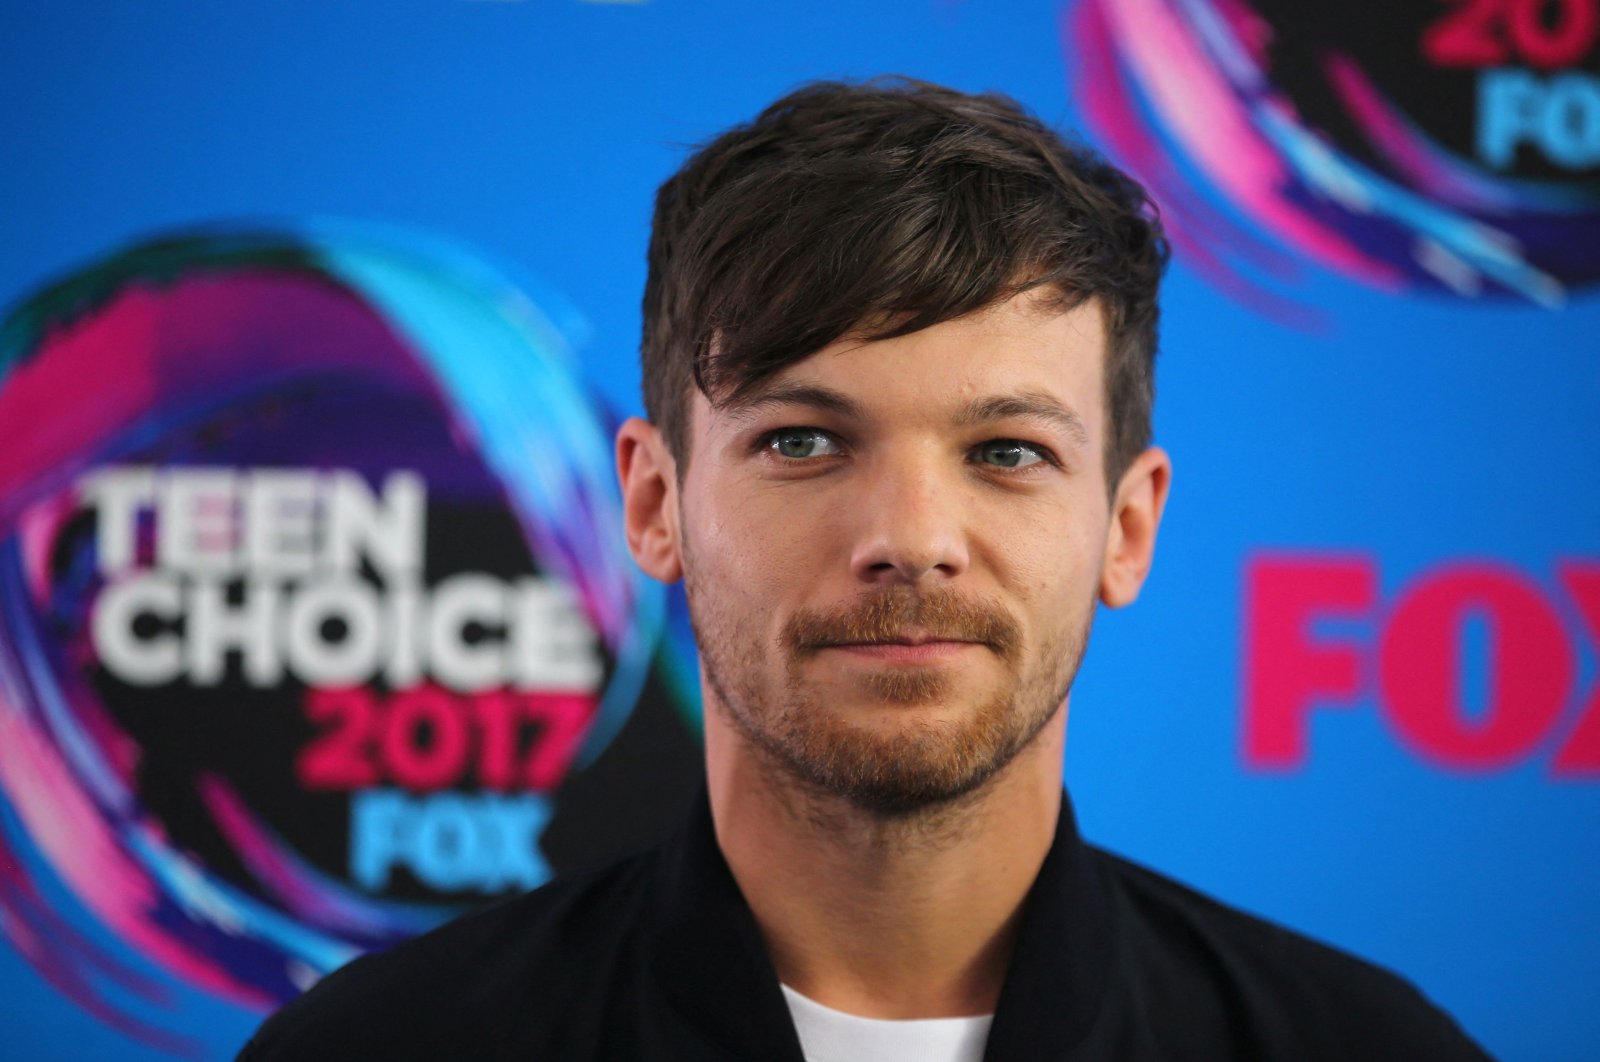 Singer Louis Tomlinson poses at 2017 Teen Choice Awards Los Angeles, U.S., Aug. 13, 2017. (Reuters Photo)
